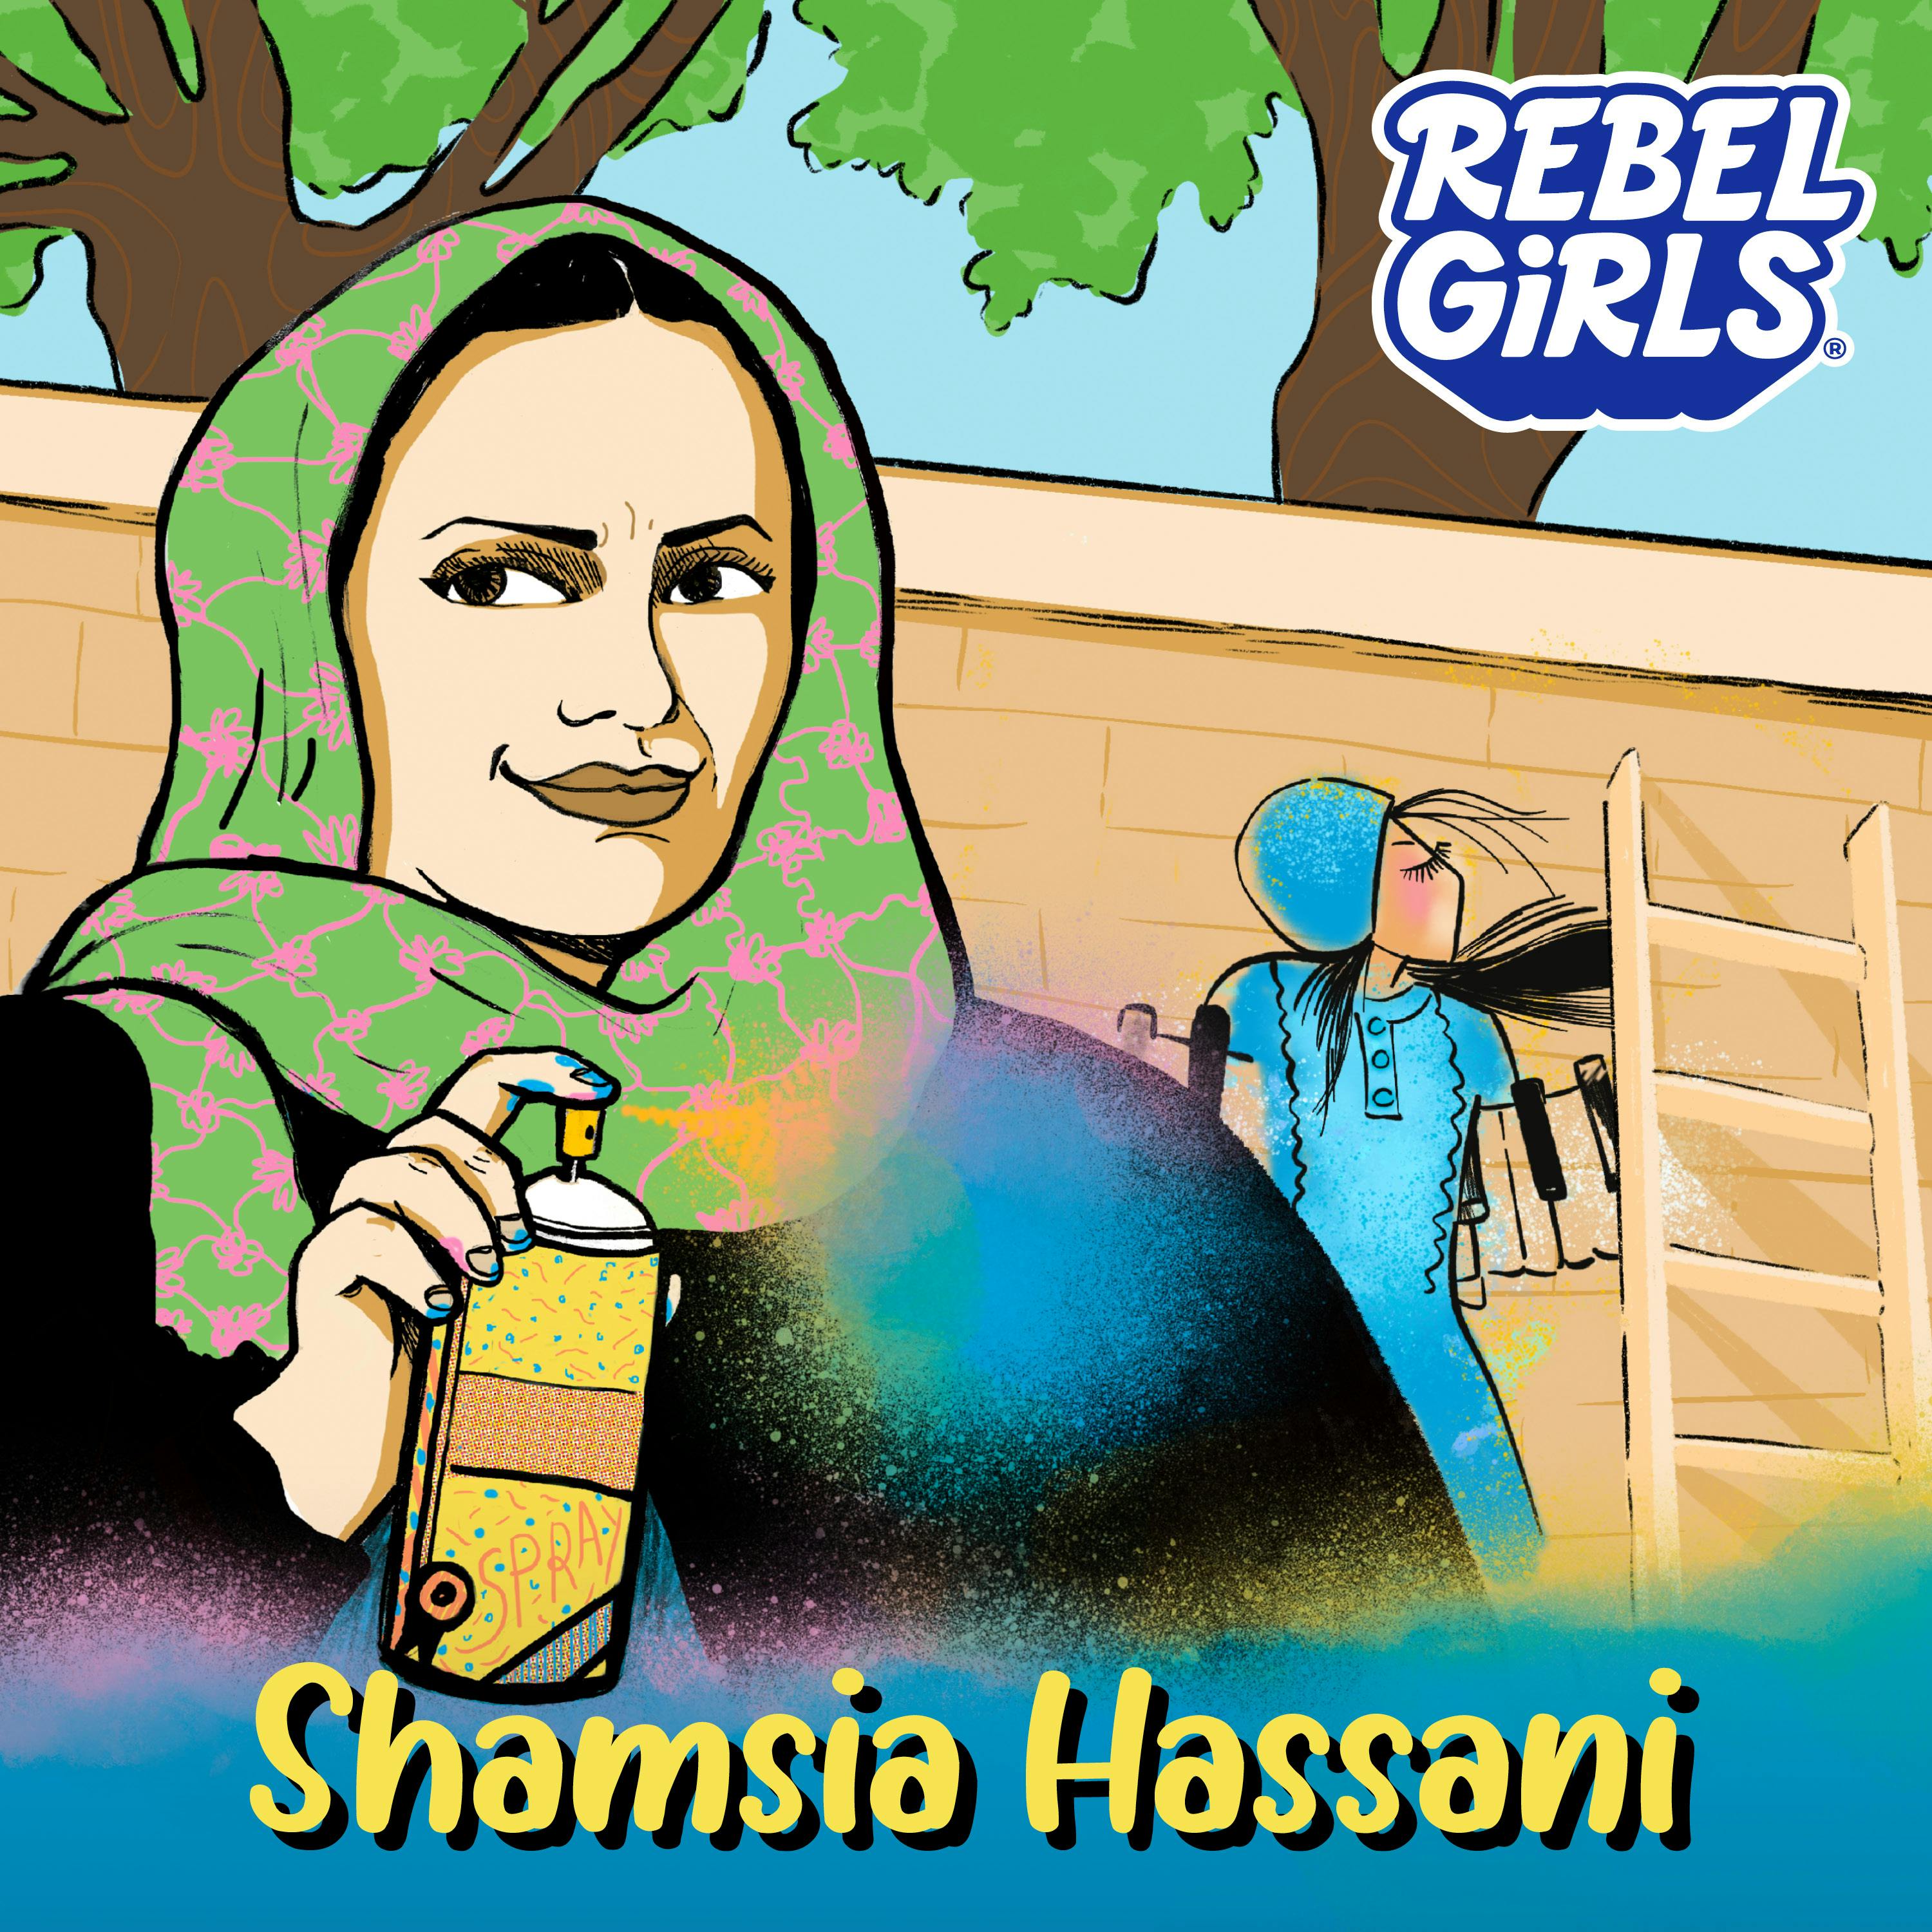 Shamsia Hassani: Painting a New Future